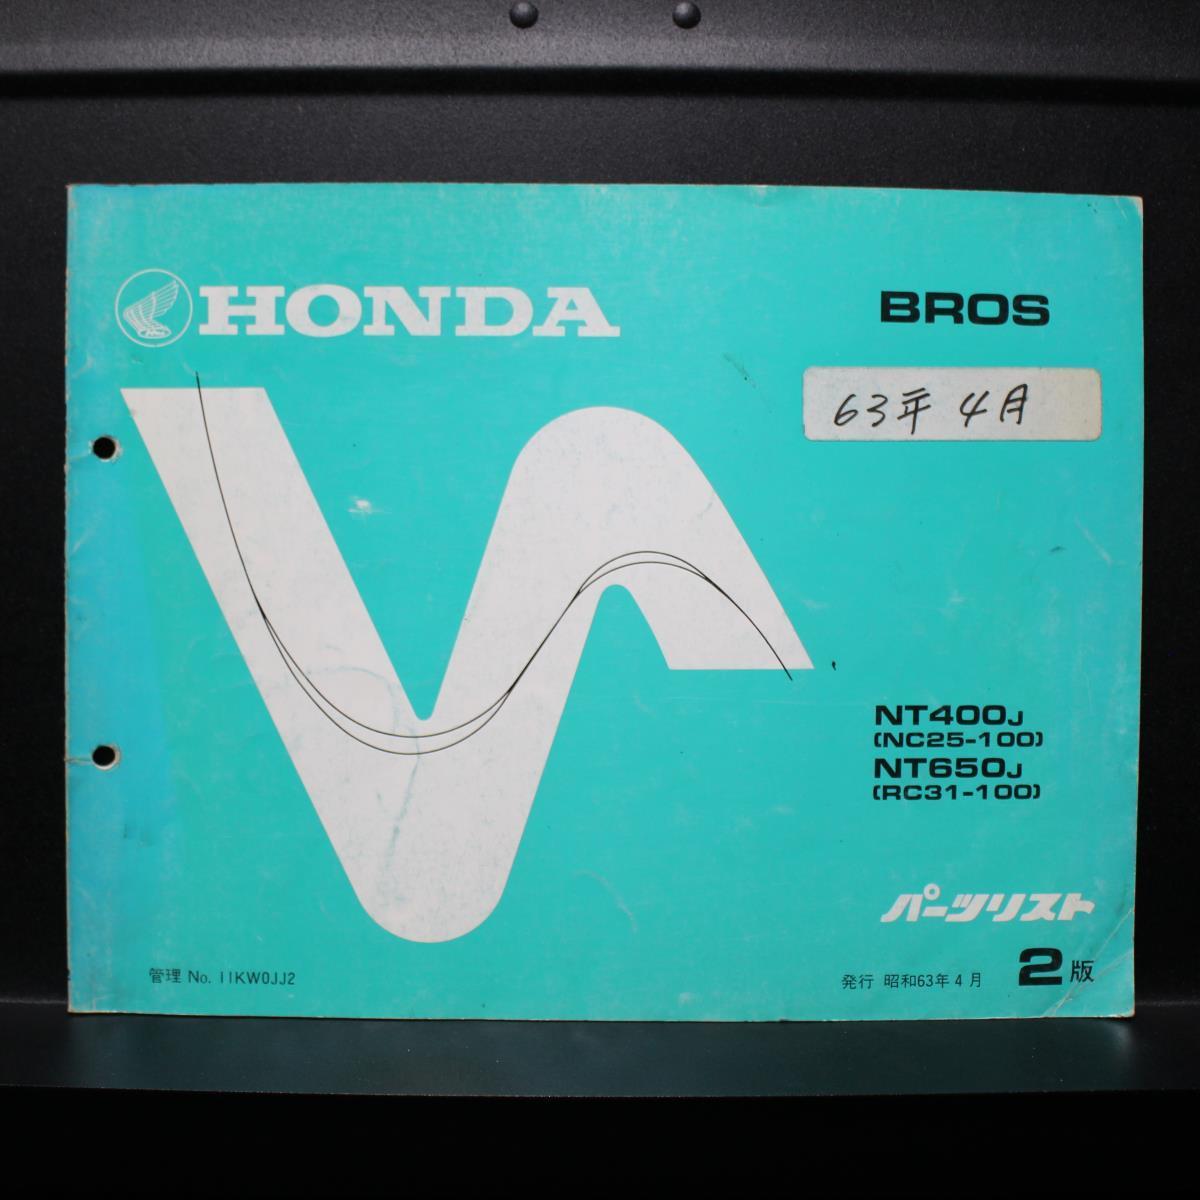 HONDAlBROS NT400J(NC25-100),NT650J(RC31-100)l parts list l1988 year 4 month issue, Showa era 63 year 4 month issue no. 2 version l11KW0JJ2l Honda l210124